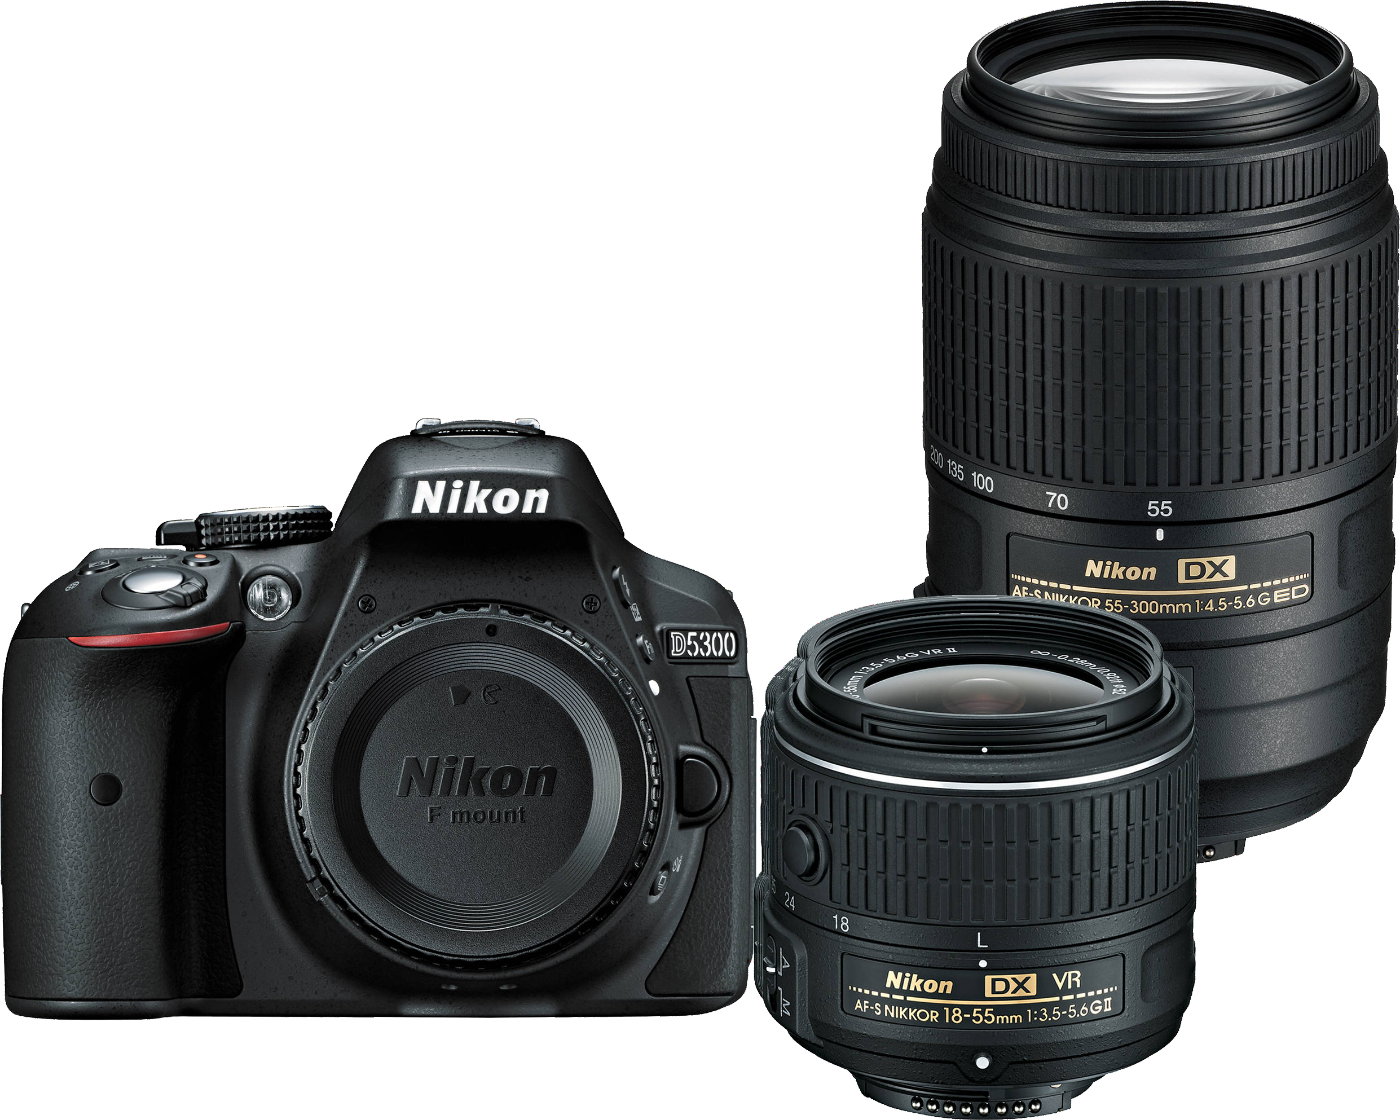 We use Canon and Nikon photography cameras